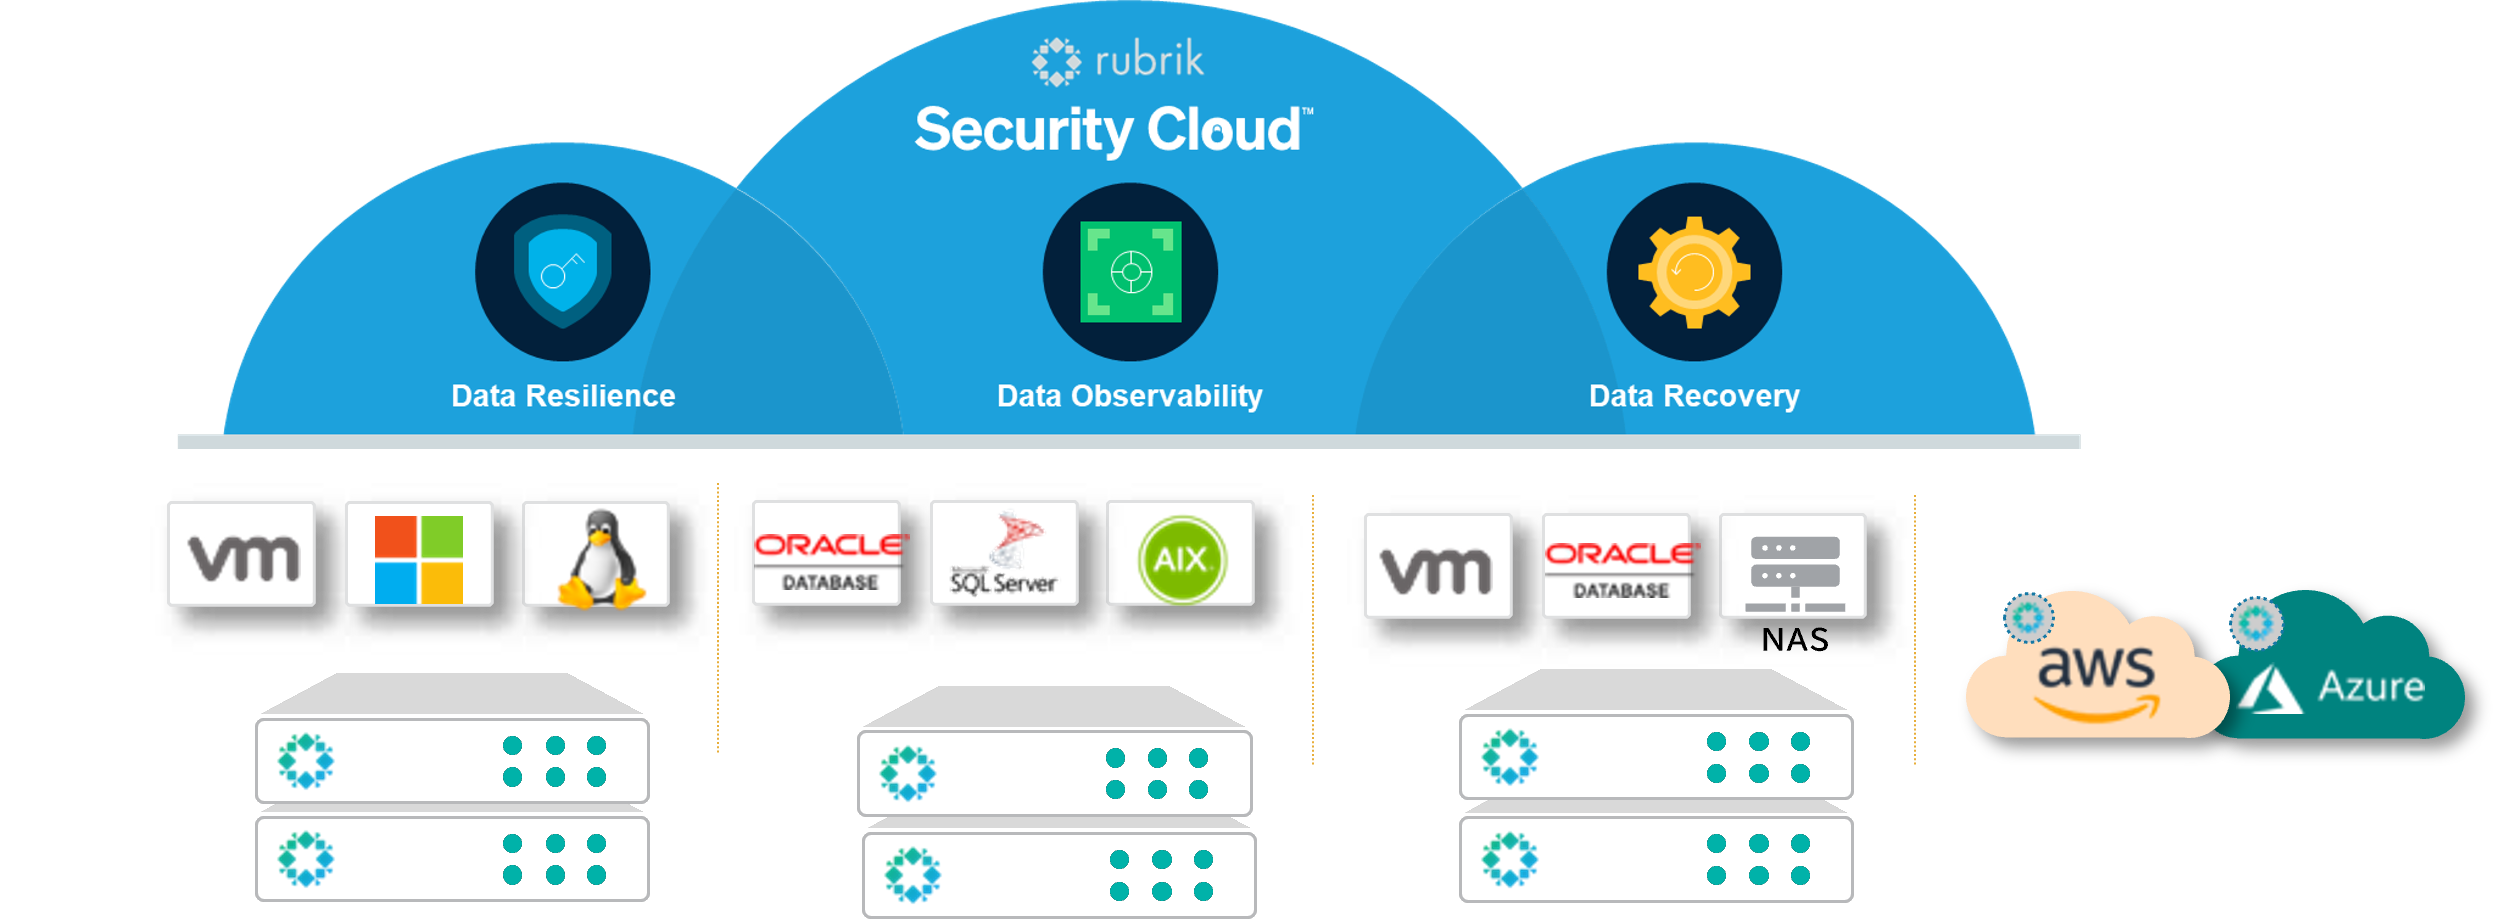 Rubrik_Security_Cloud